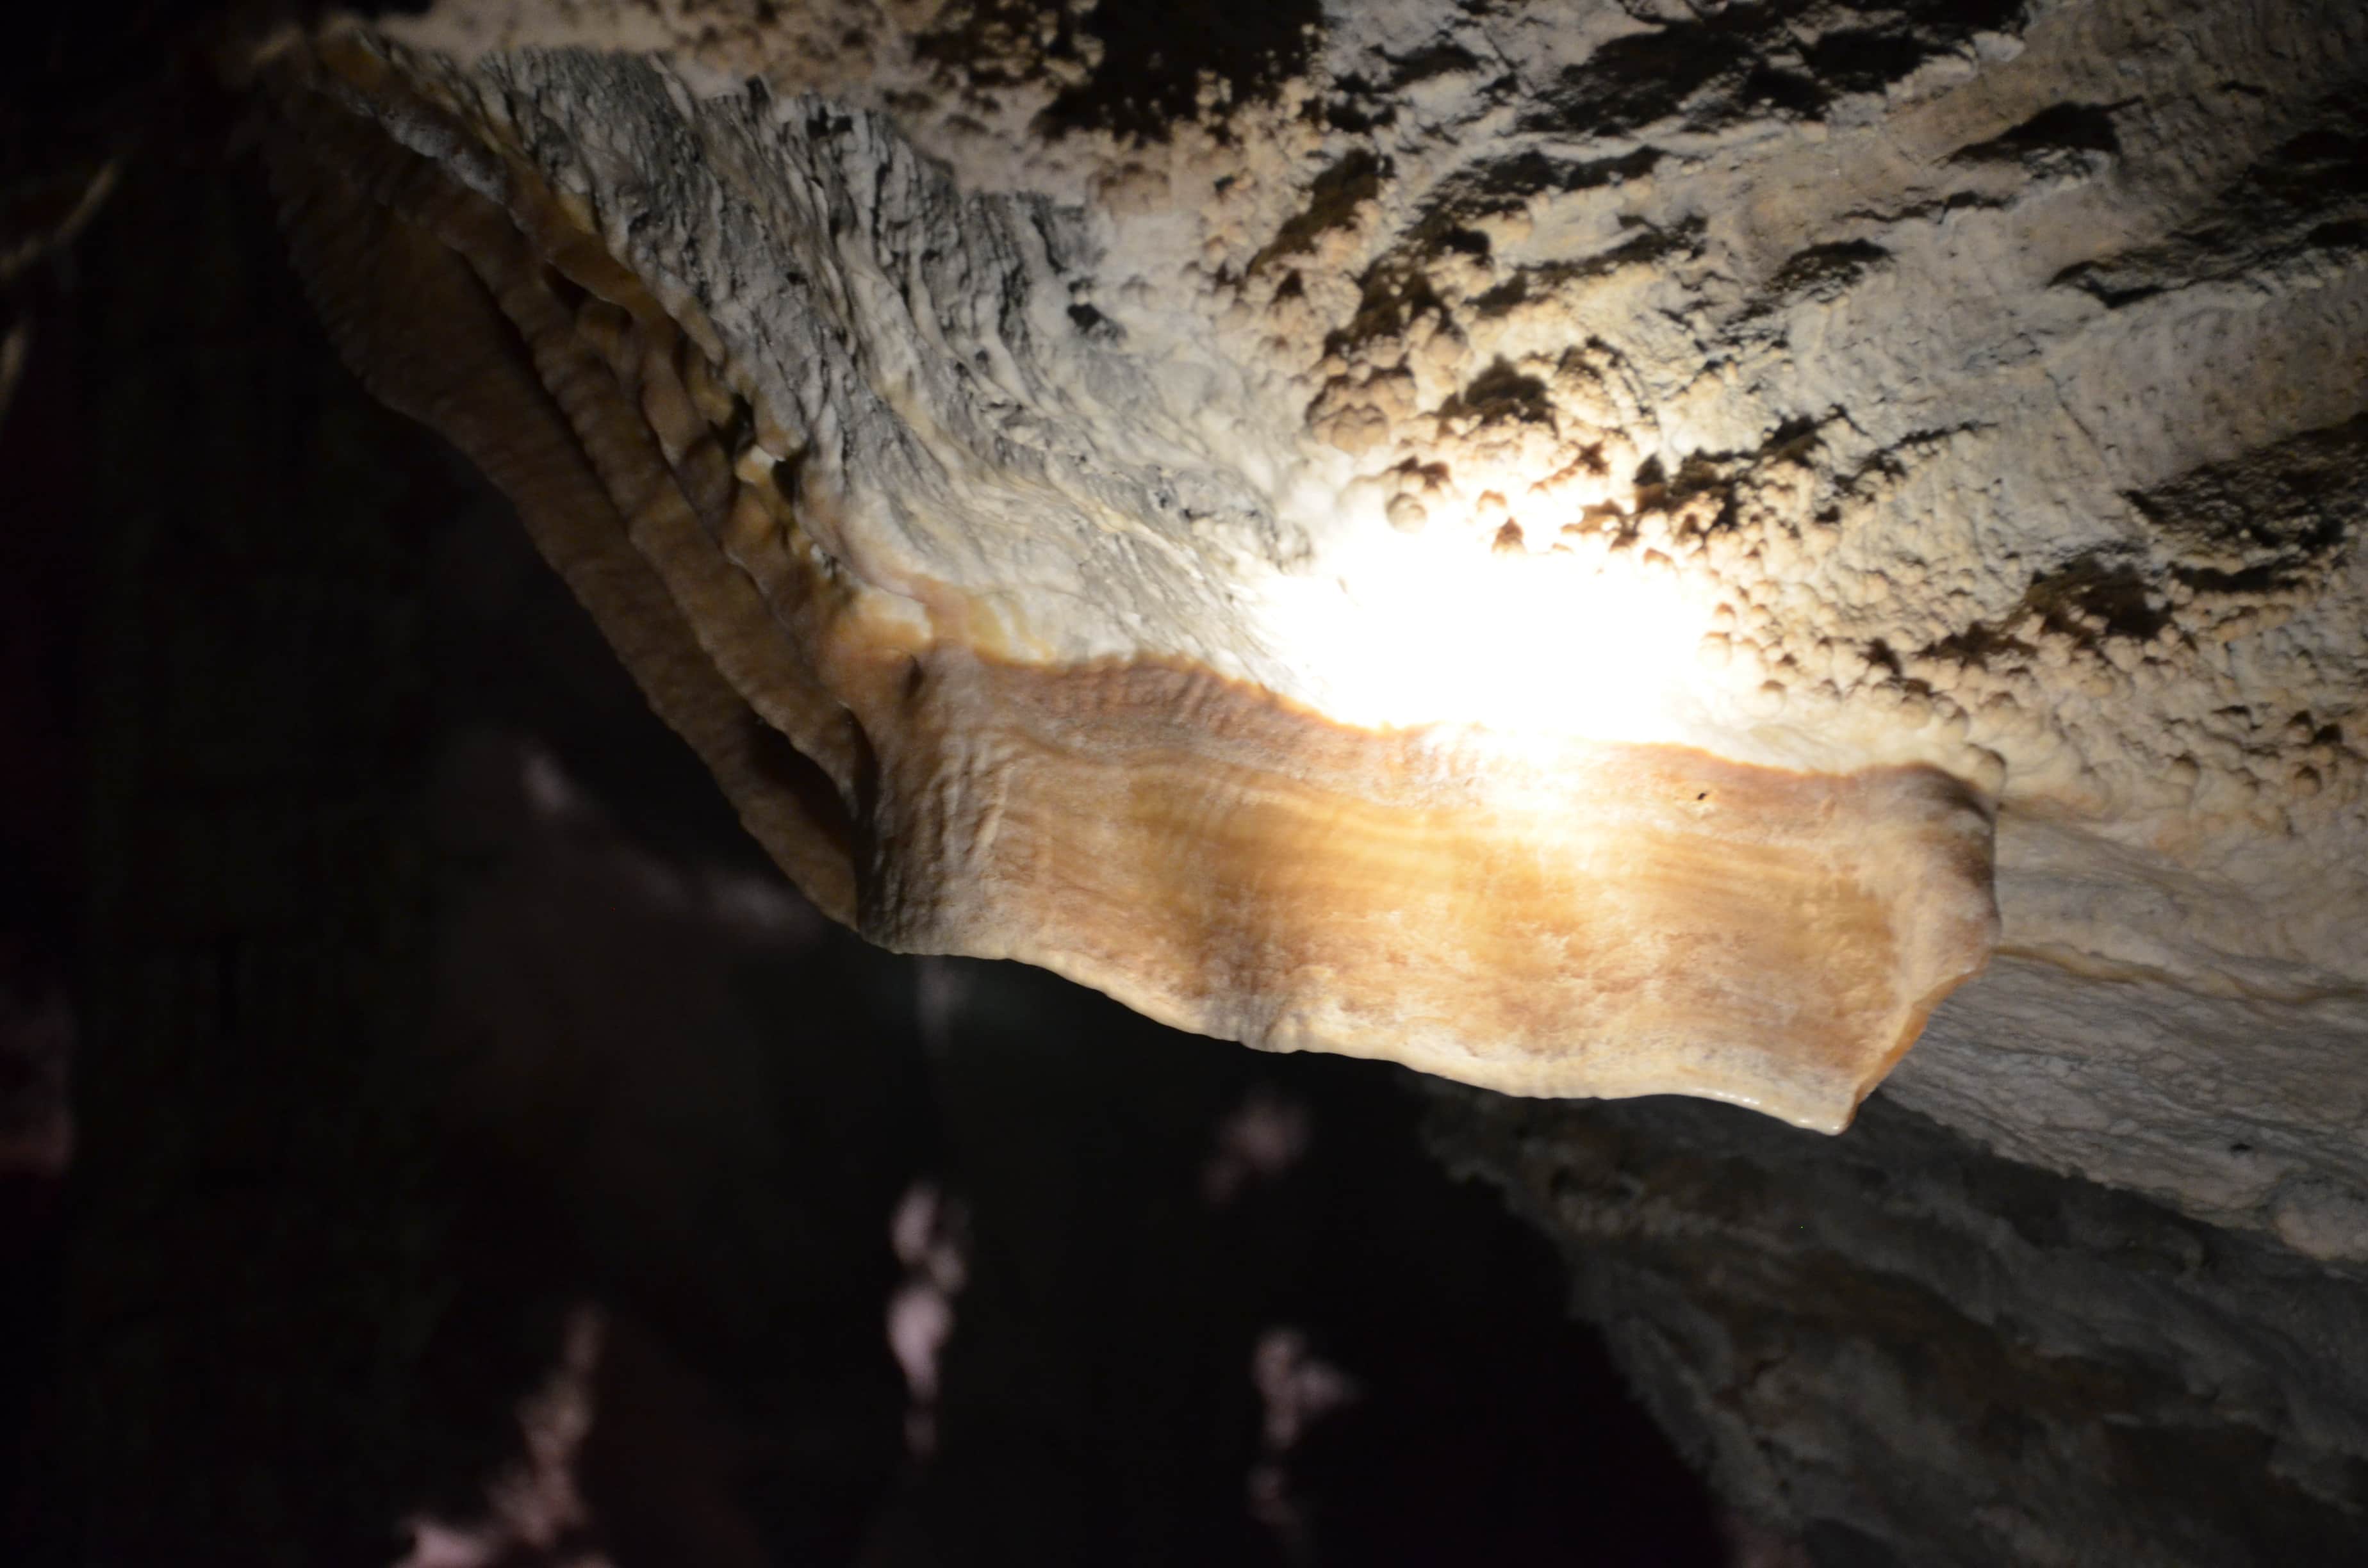 Cave bacon at Lehman Caves, Great Basin National Park, Nevada